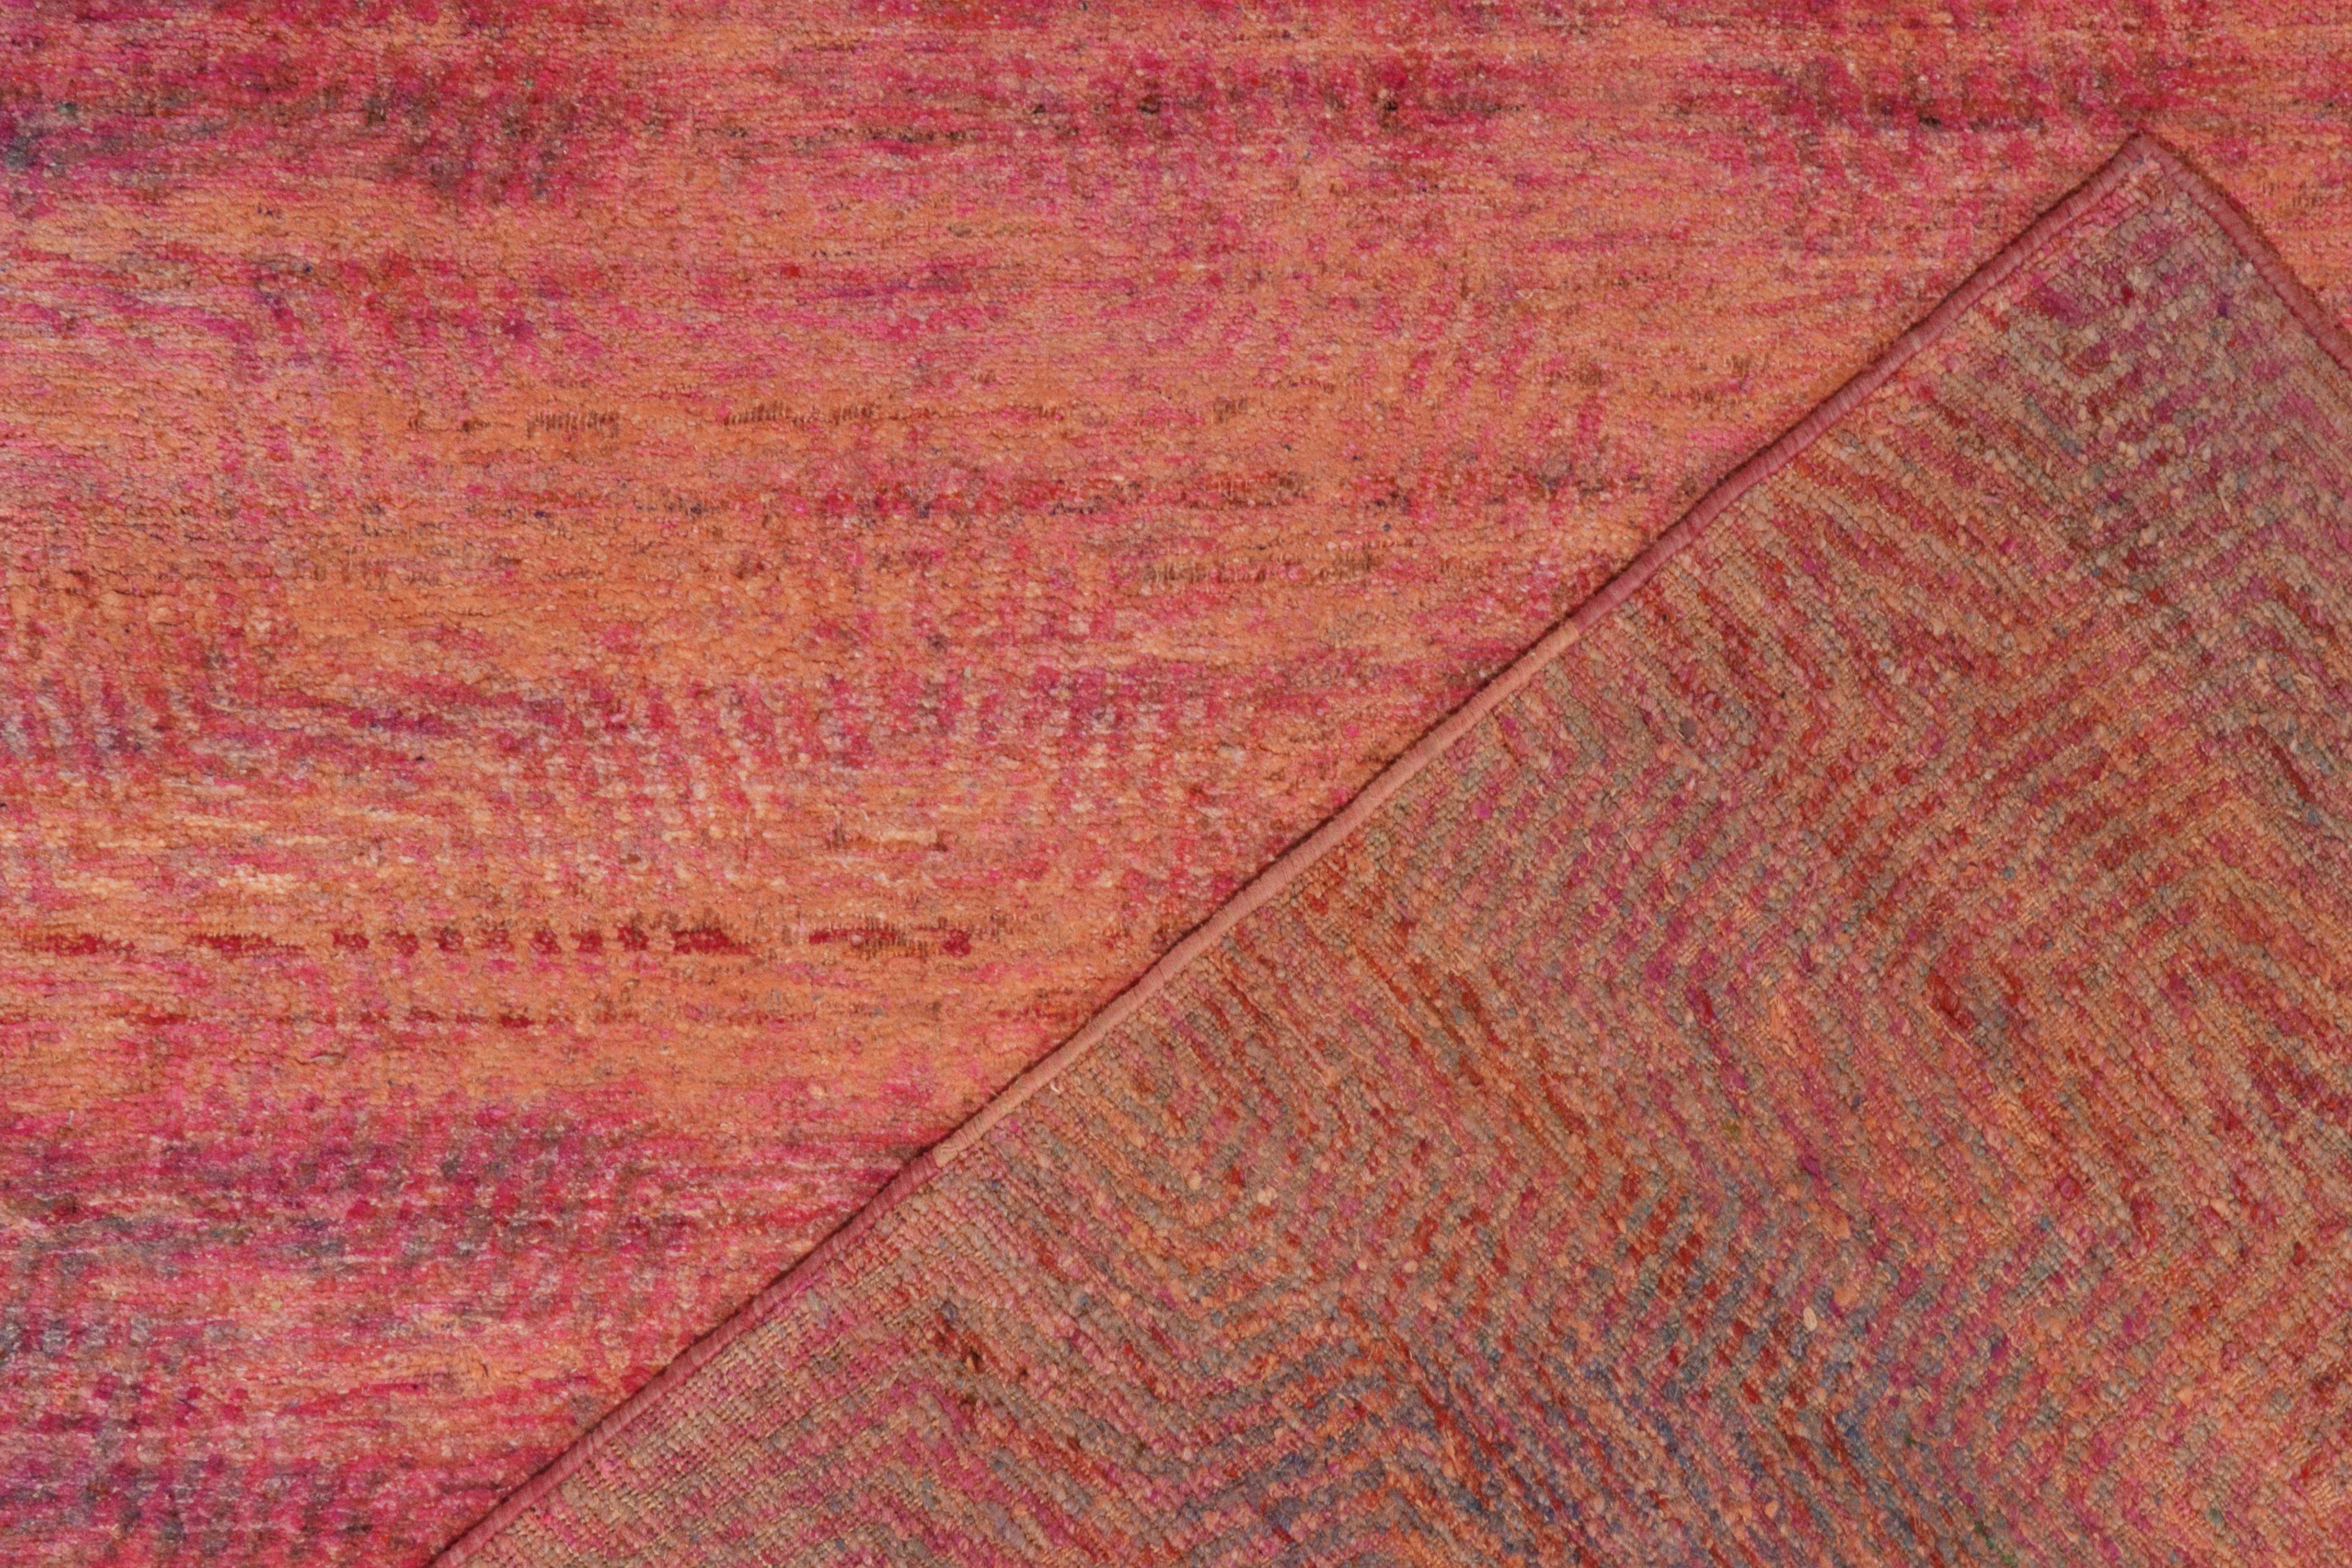 Contemporary Rug & Kilim’s Hand-Knotted Silk Rug Orange, Purple Striae Pattern For Sale